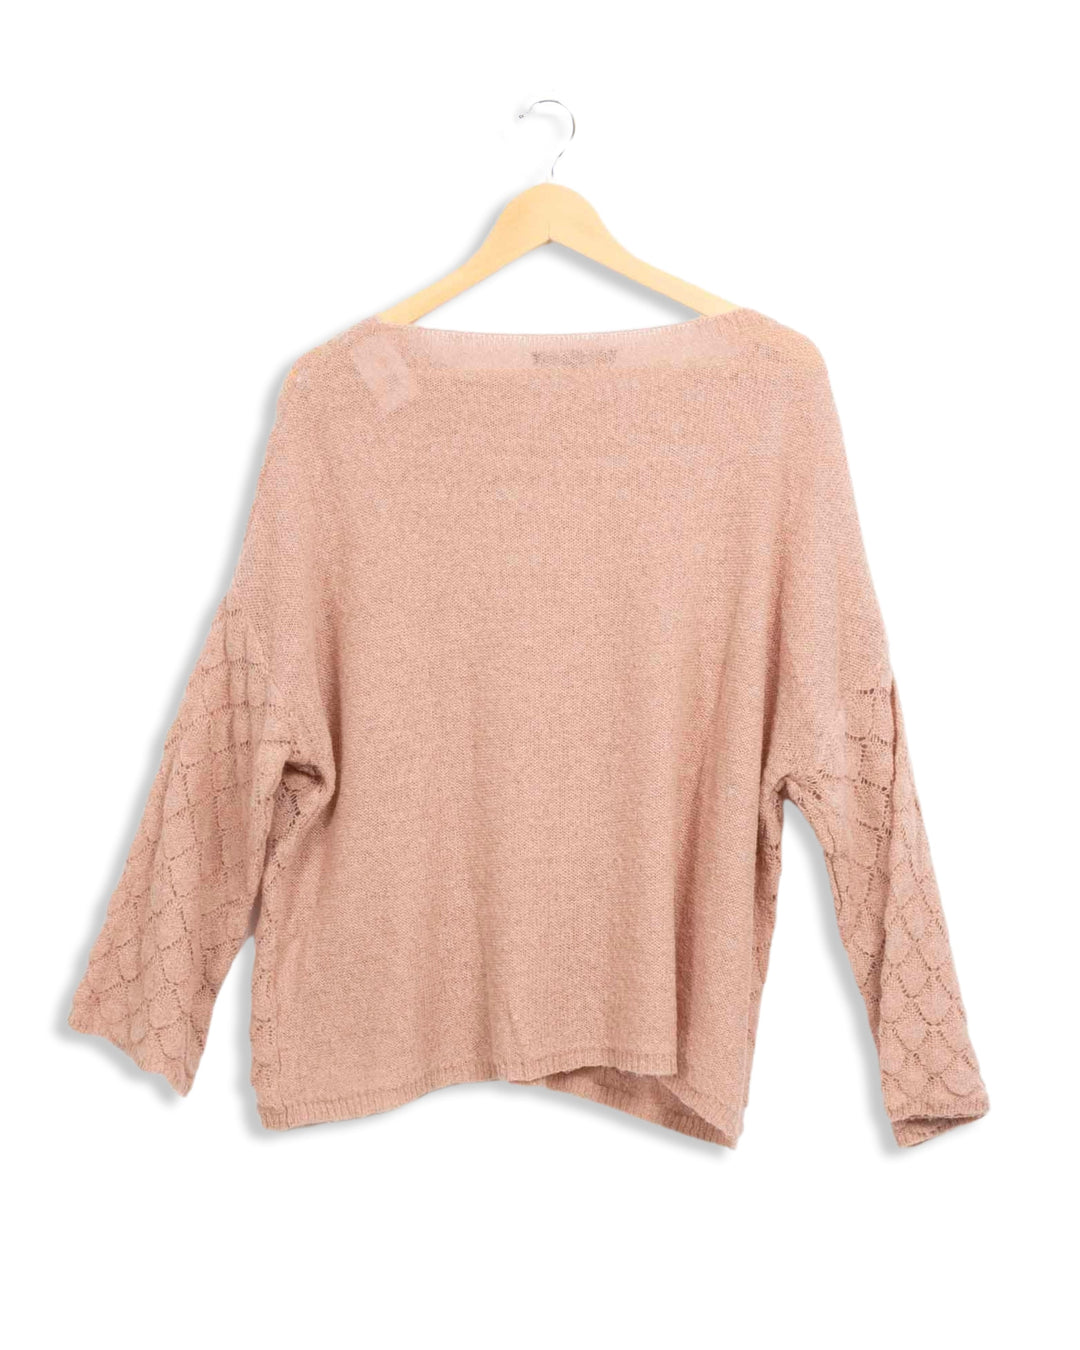 La Fée Maraboutée knitted sweater - T2